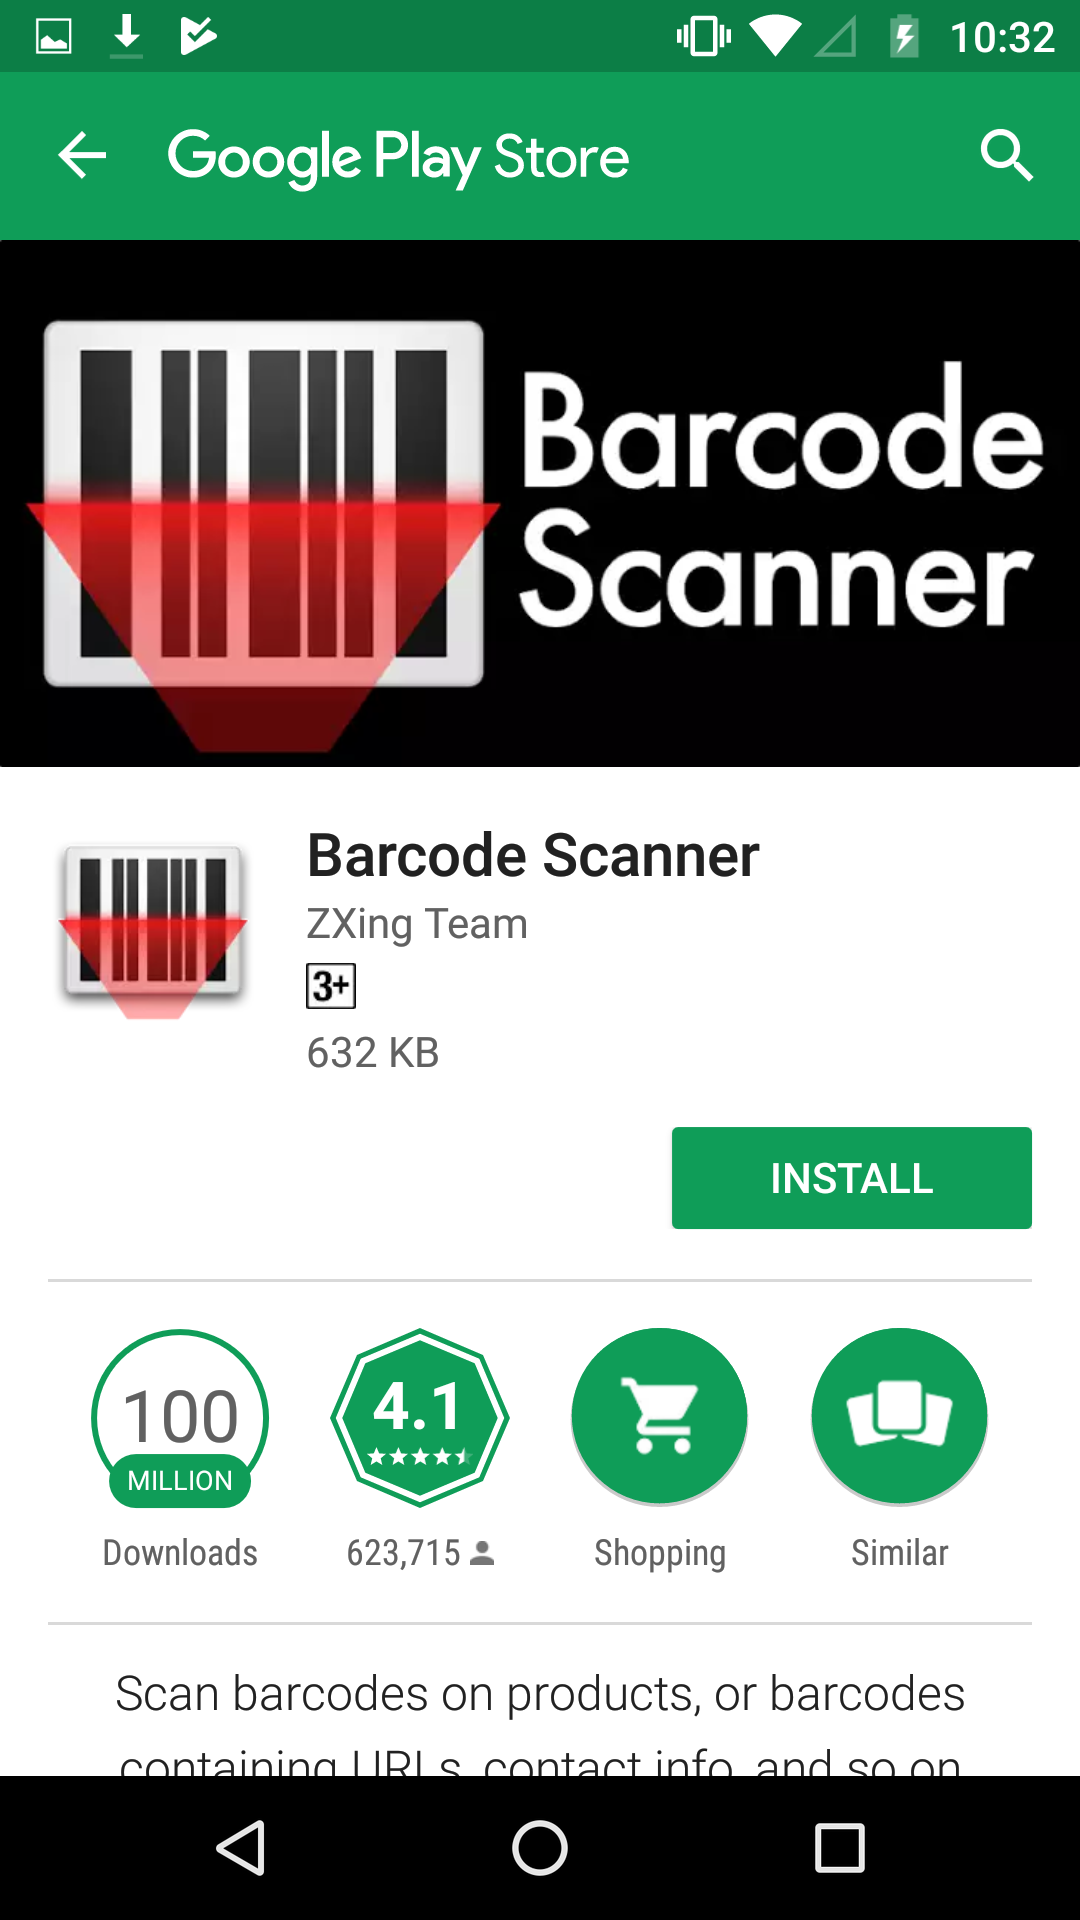 Barcode Scanner Sample App using NFI